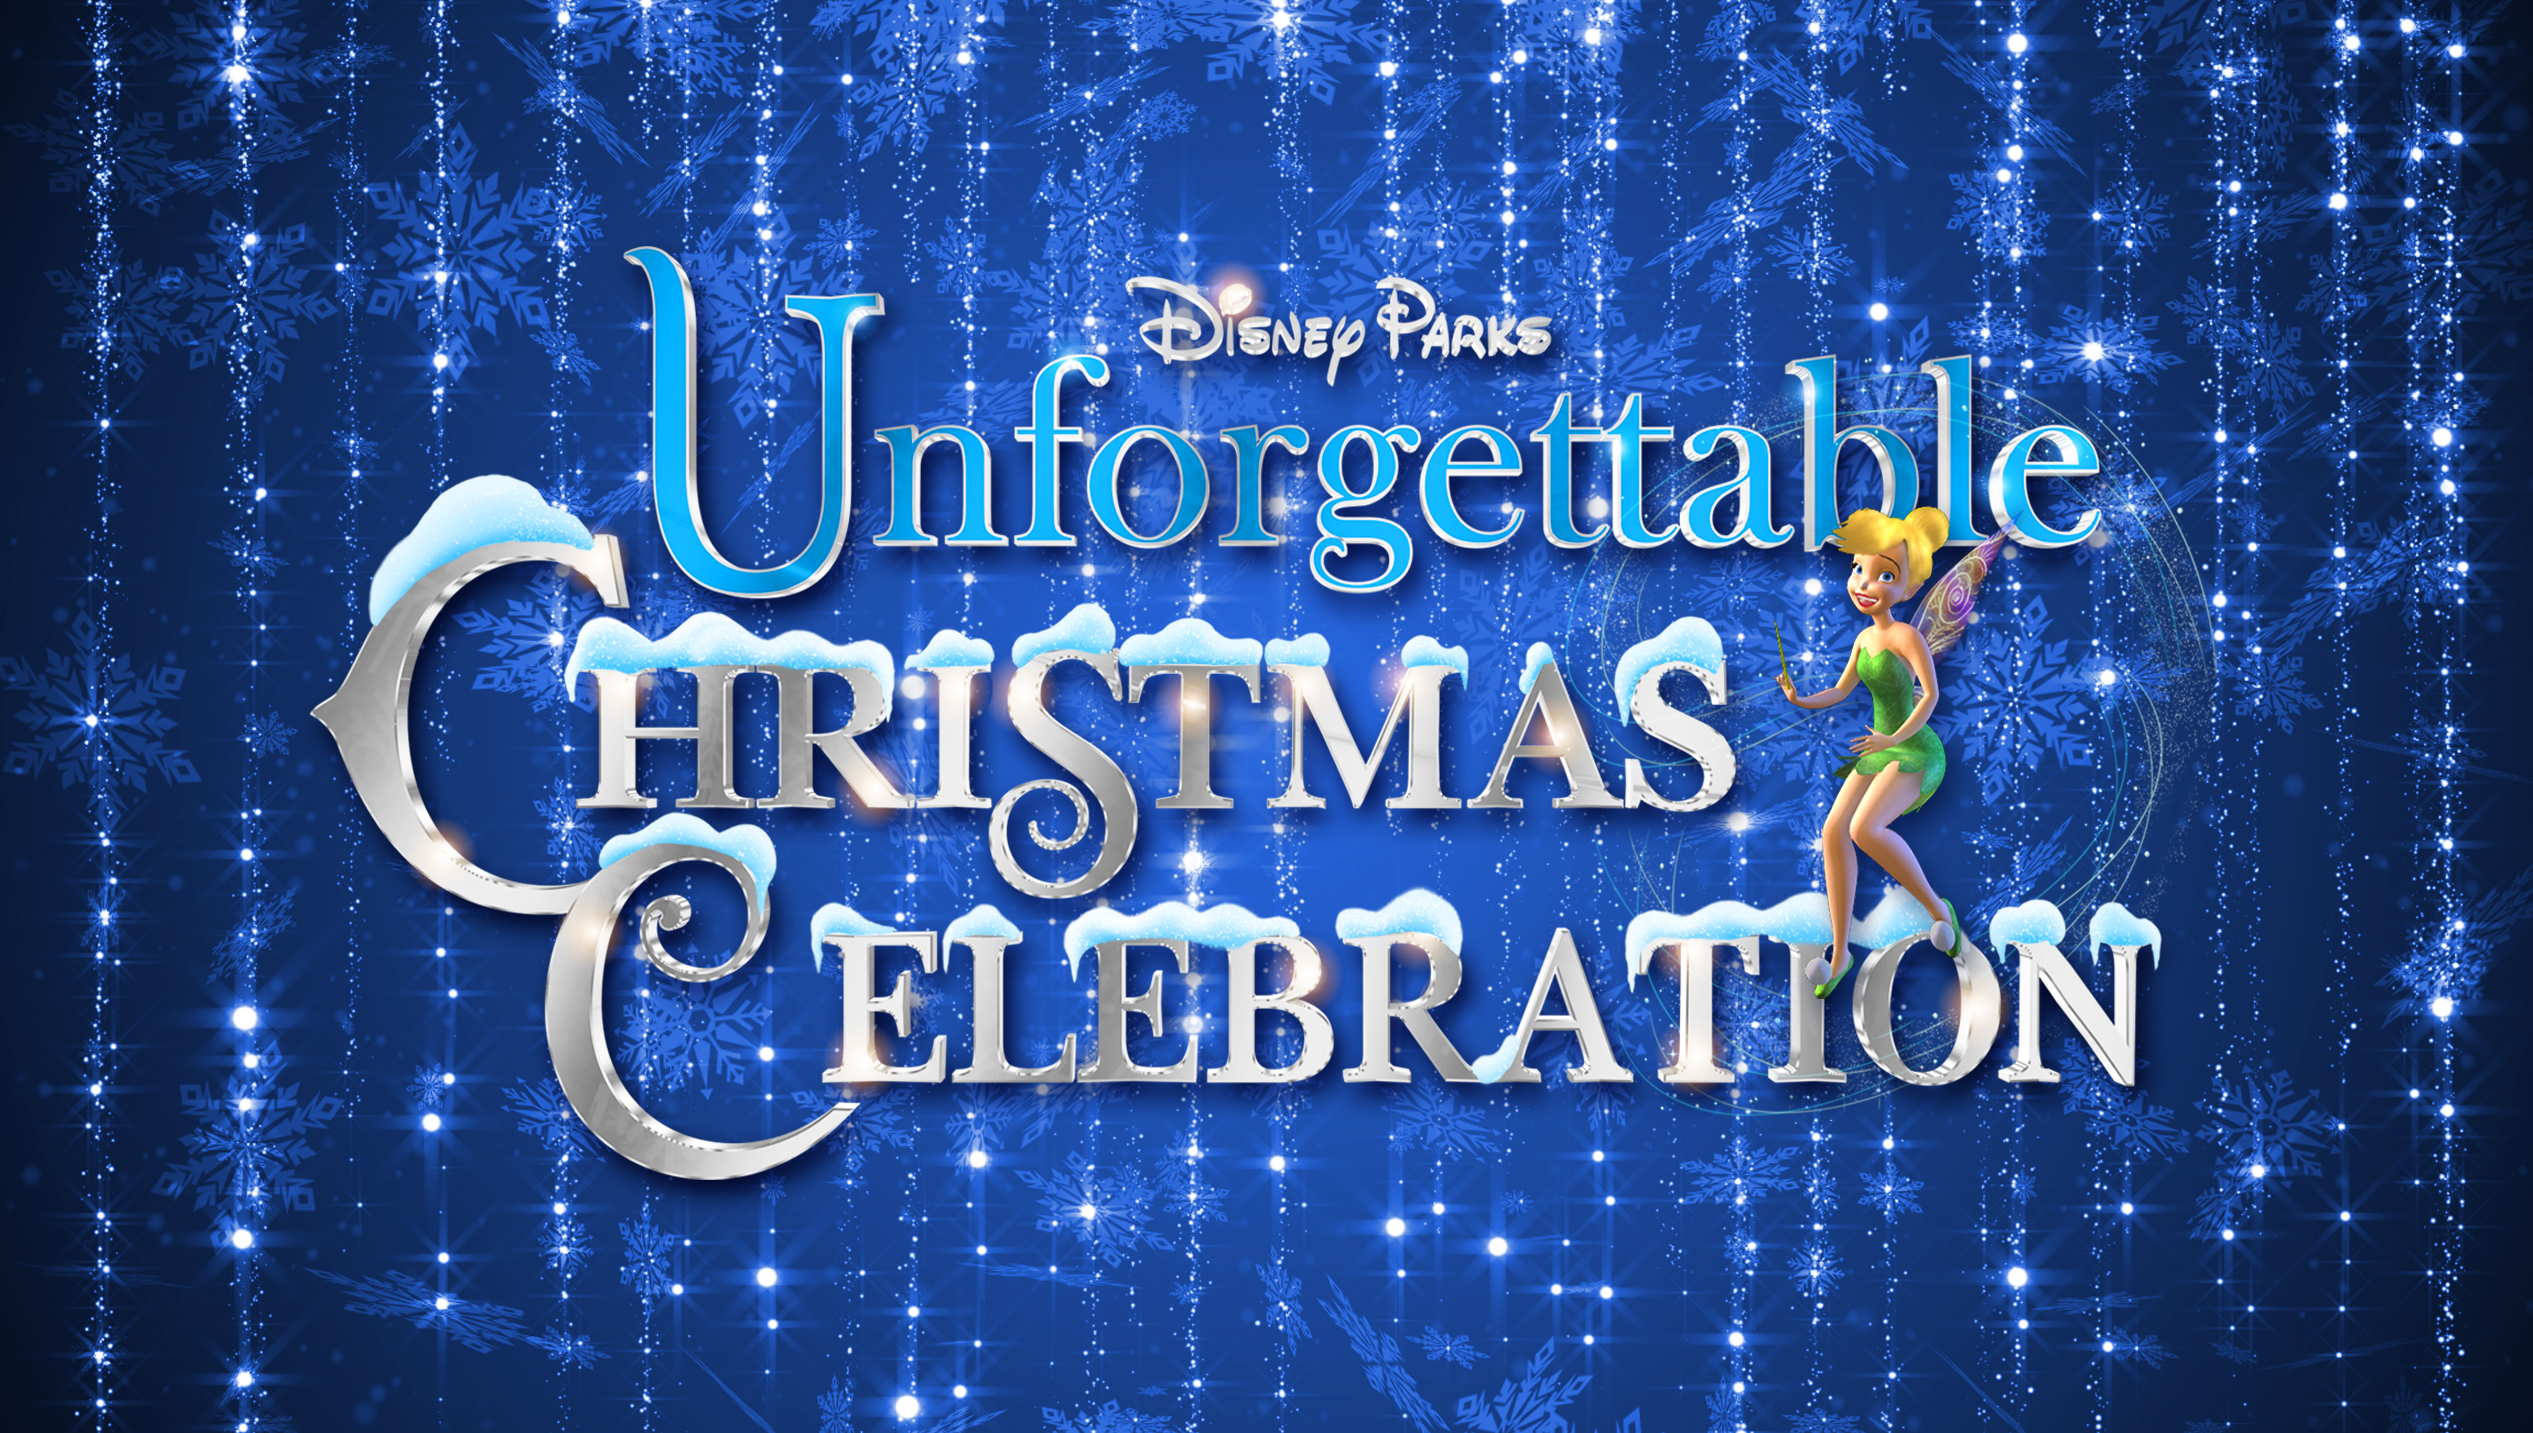 2015 Disney Parks Christmas Broadcast Details